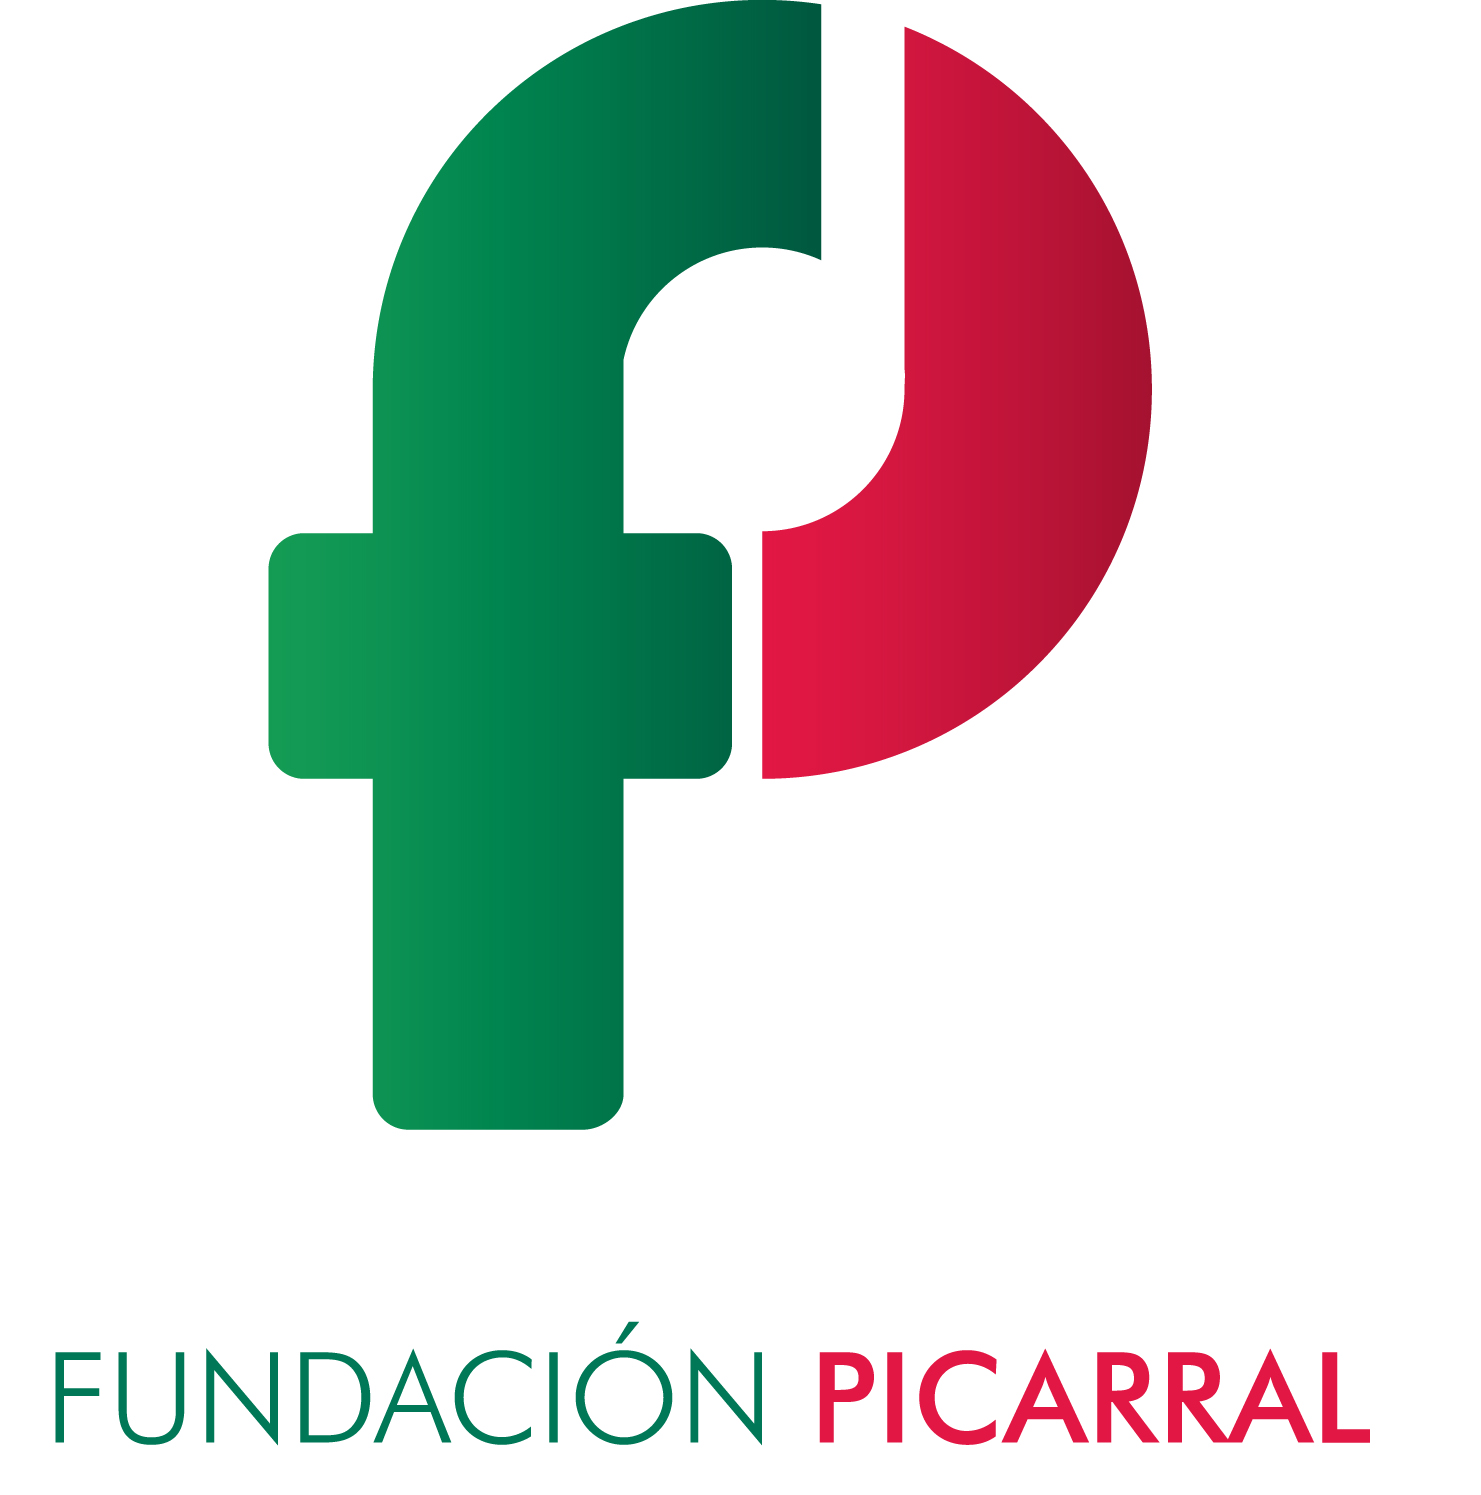 Fundación Picarral